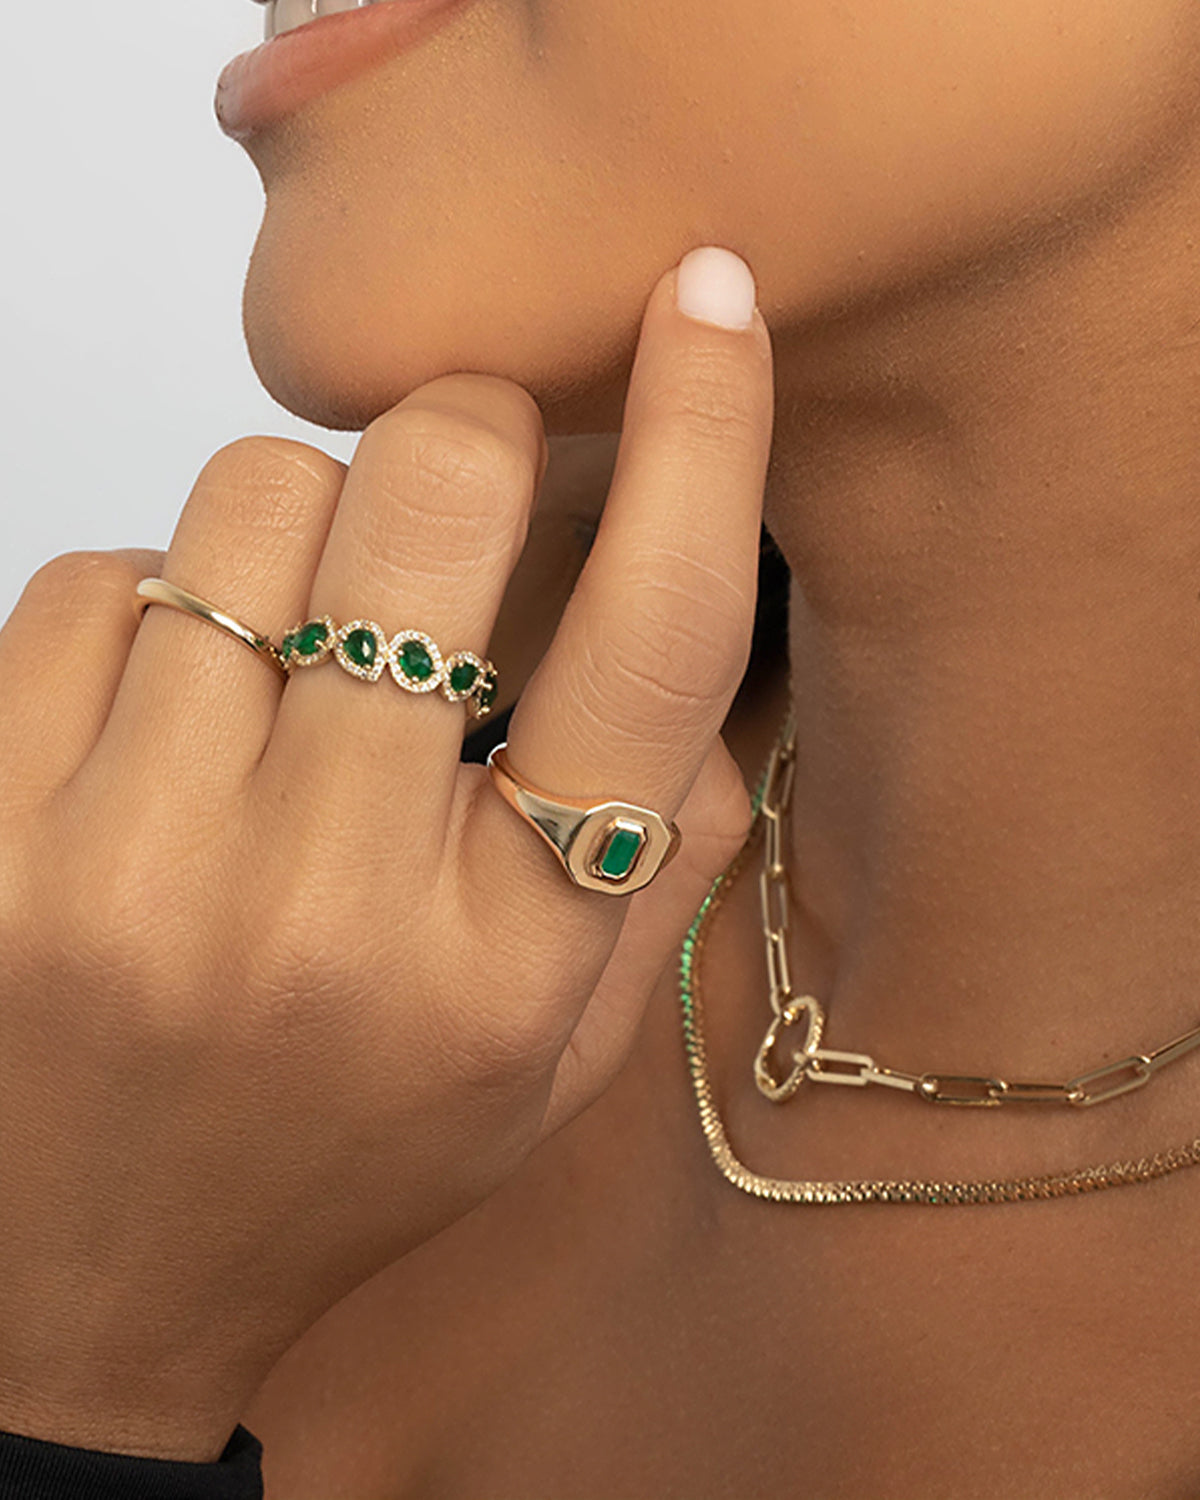 Emerald Signet Ring